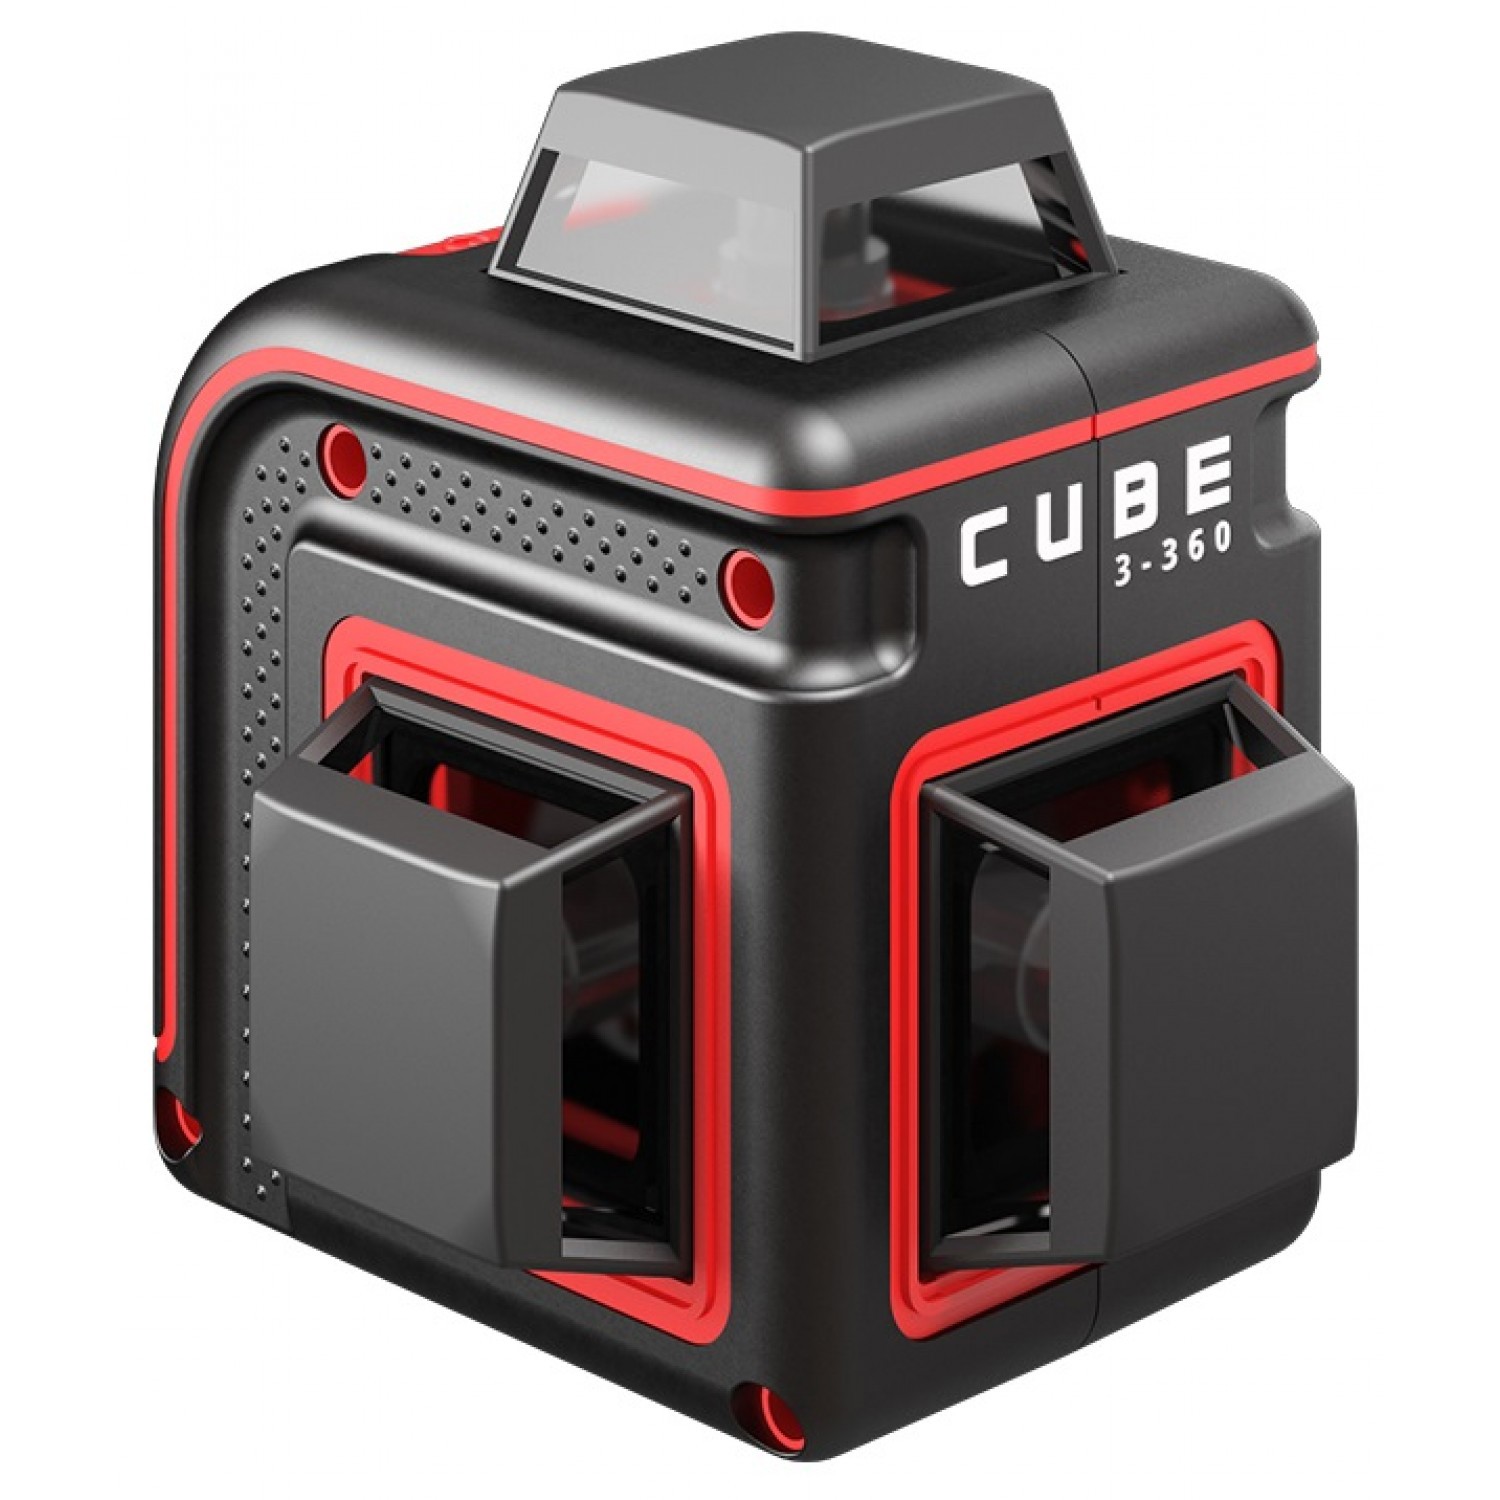 Cube 360 basic edition. Лазерный уровень ada Cube 3-360 Home Edition а00565. Нивелир лазерный ada Cube 360 professional Edition. Лазерный уровень ada Cube 360 Basic Edition. Лазерный уровень ada Cube 3-360 Green Basic Edition.